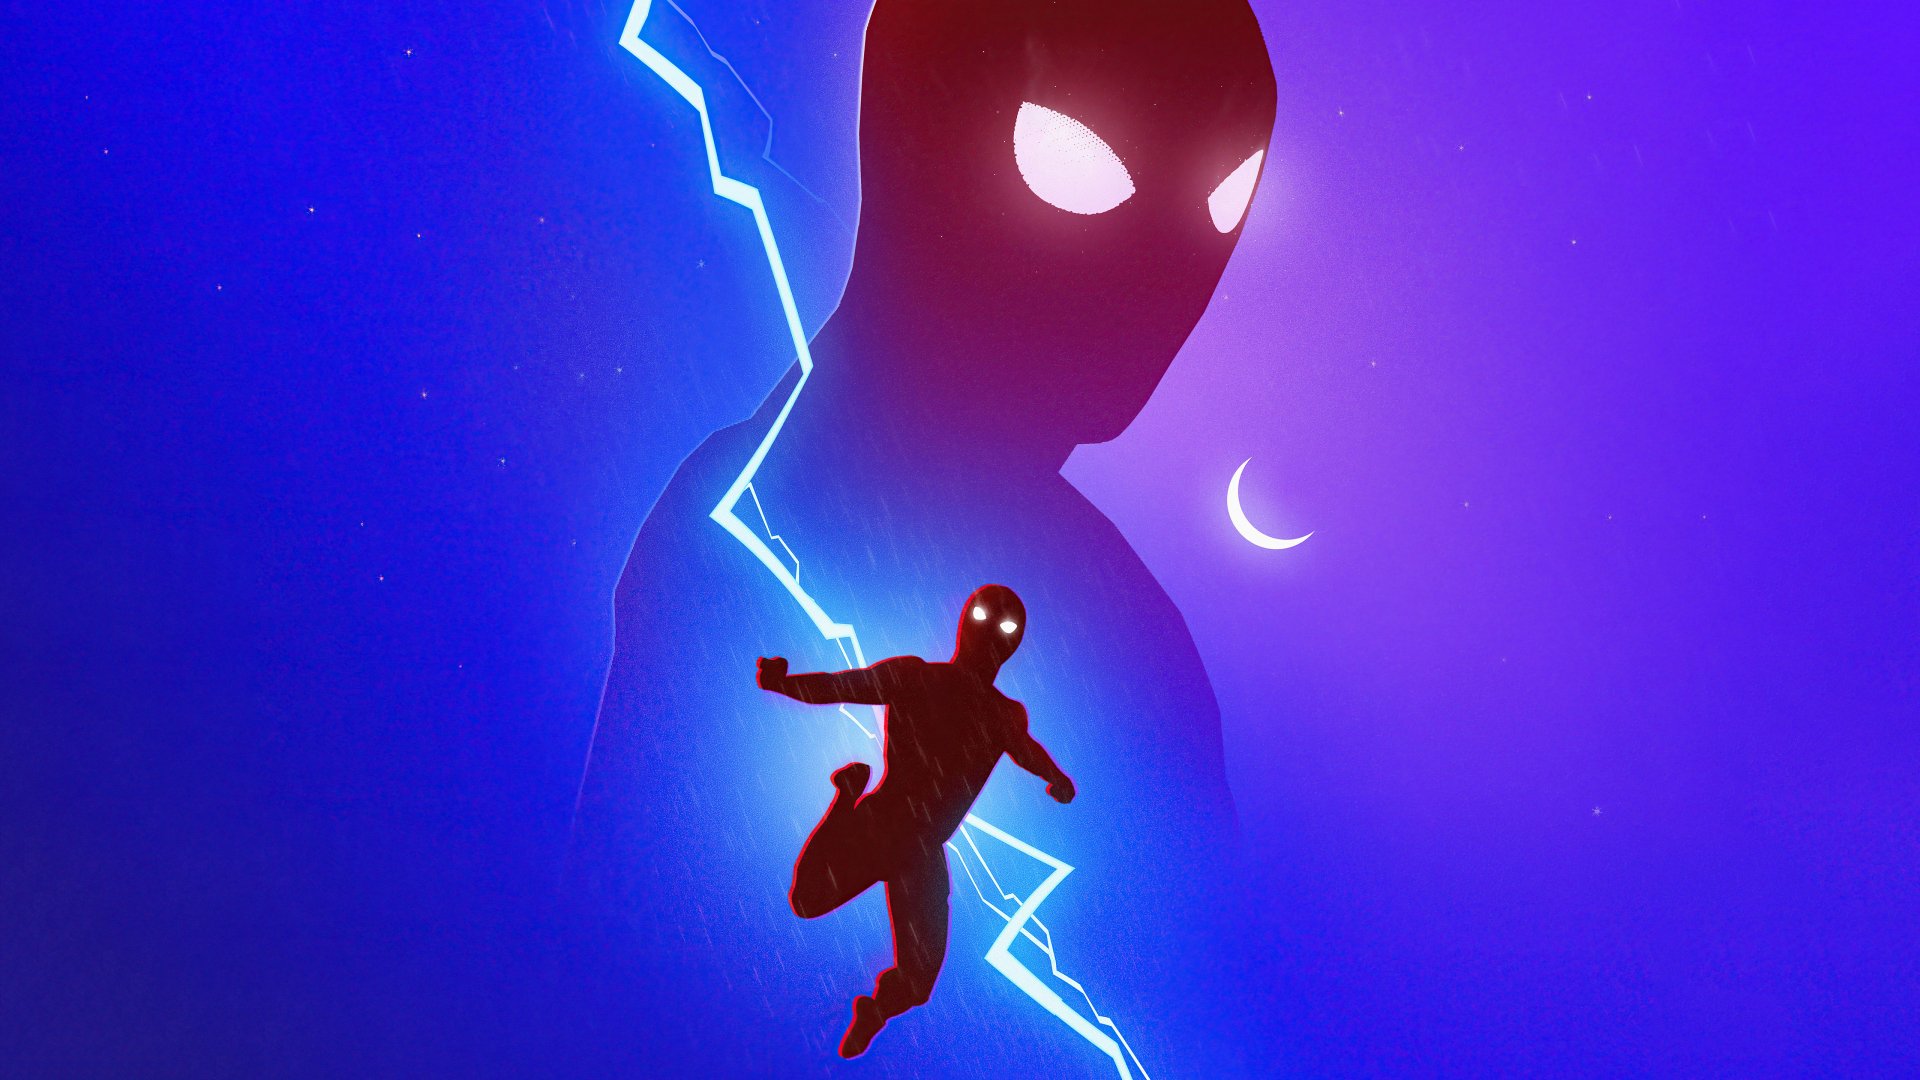 Spider-Man: No Way Home 4k Ultra HD Wallpaper by William J Harris.